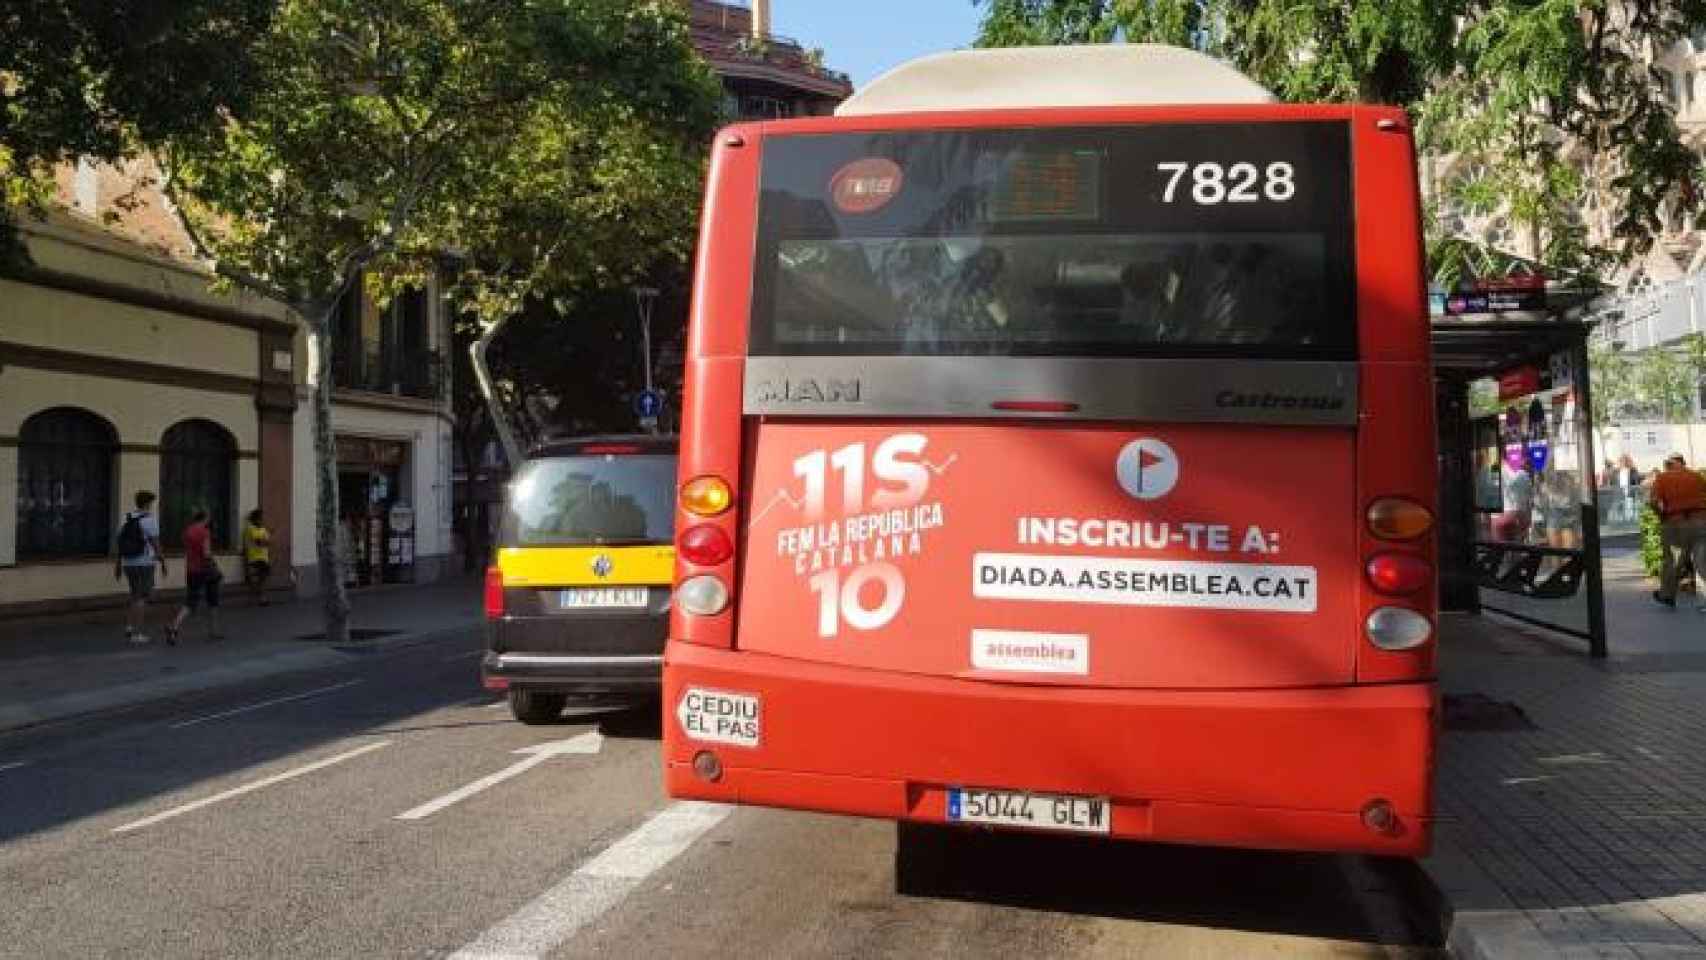 Imagen de un autobús de Transports Metropolitans de Barcelona (TMB) con publicidad de la Diada de la ANC / CG